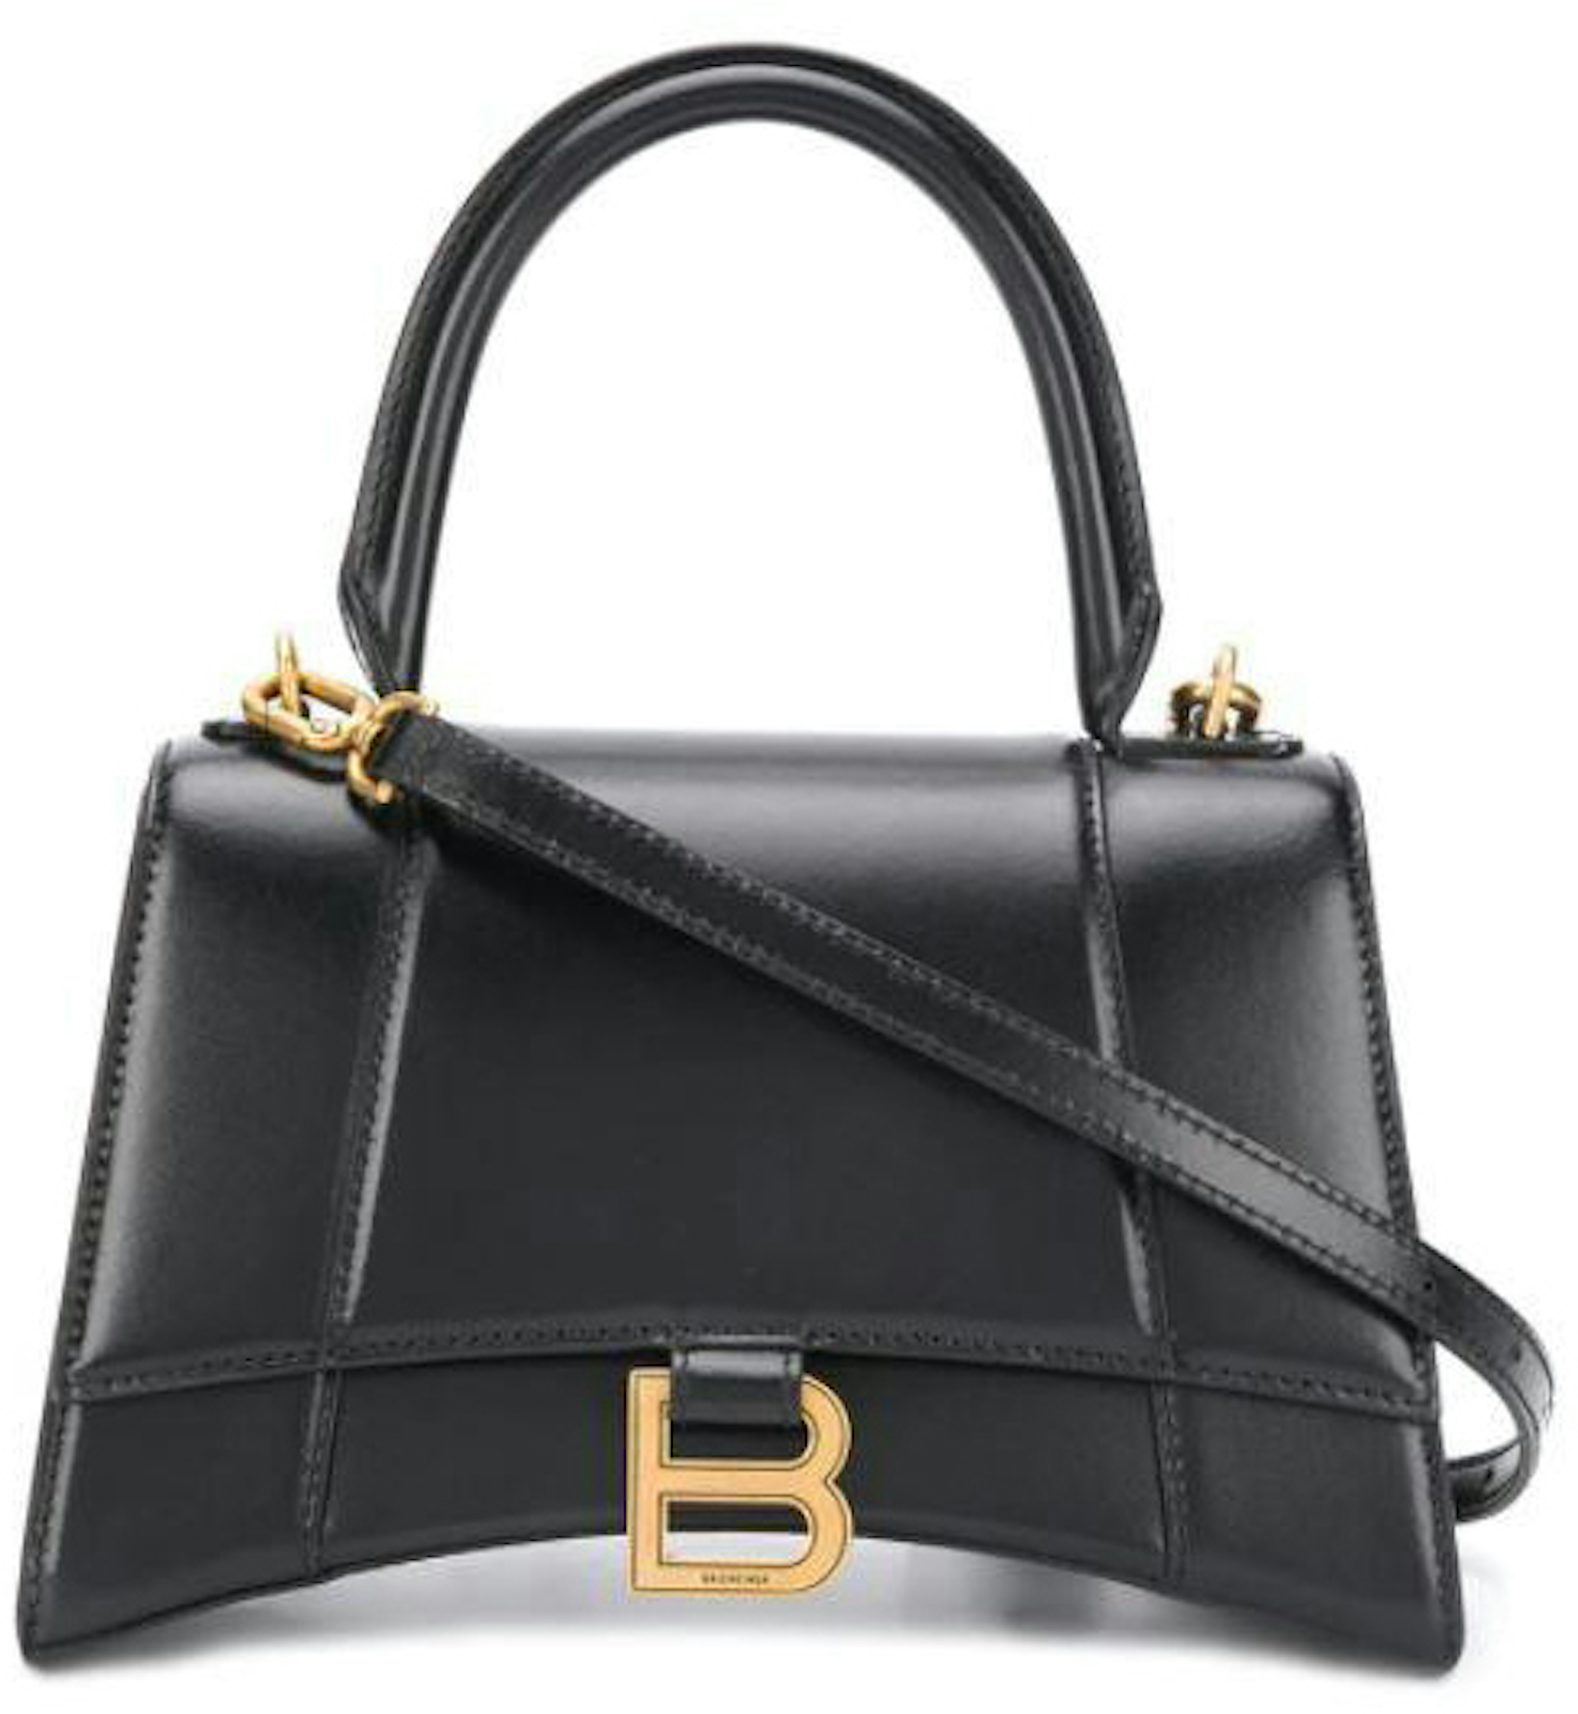 Hourglass Mini Leather Crossbody Bag in Black - Balenciaga